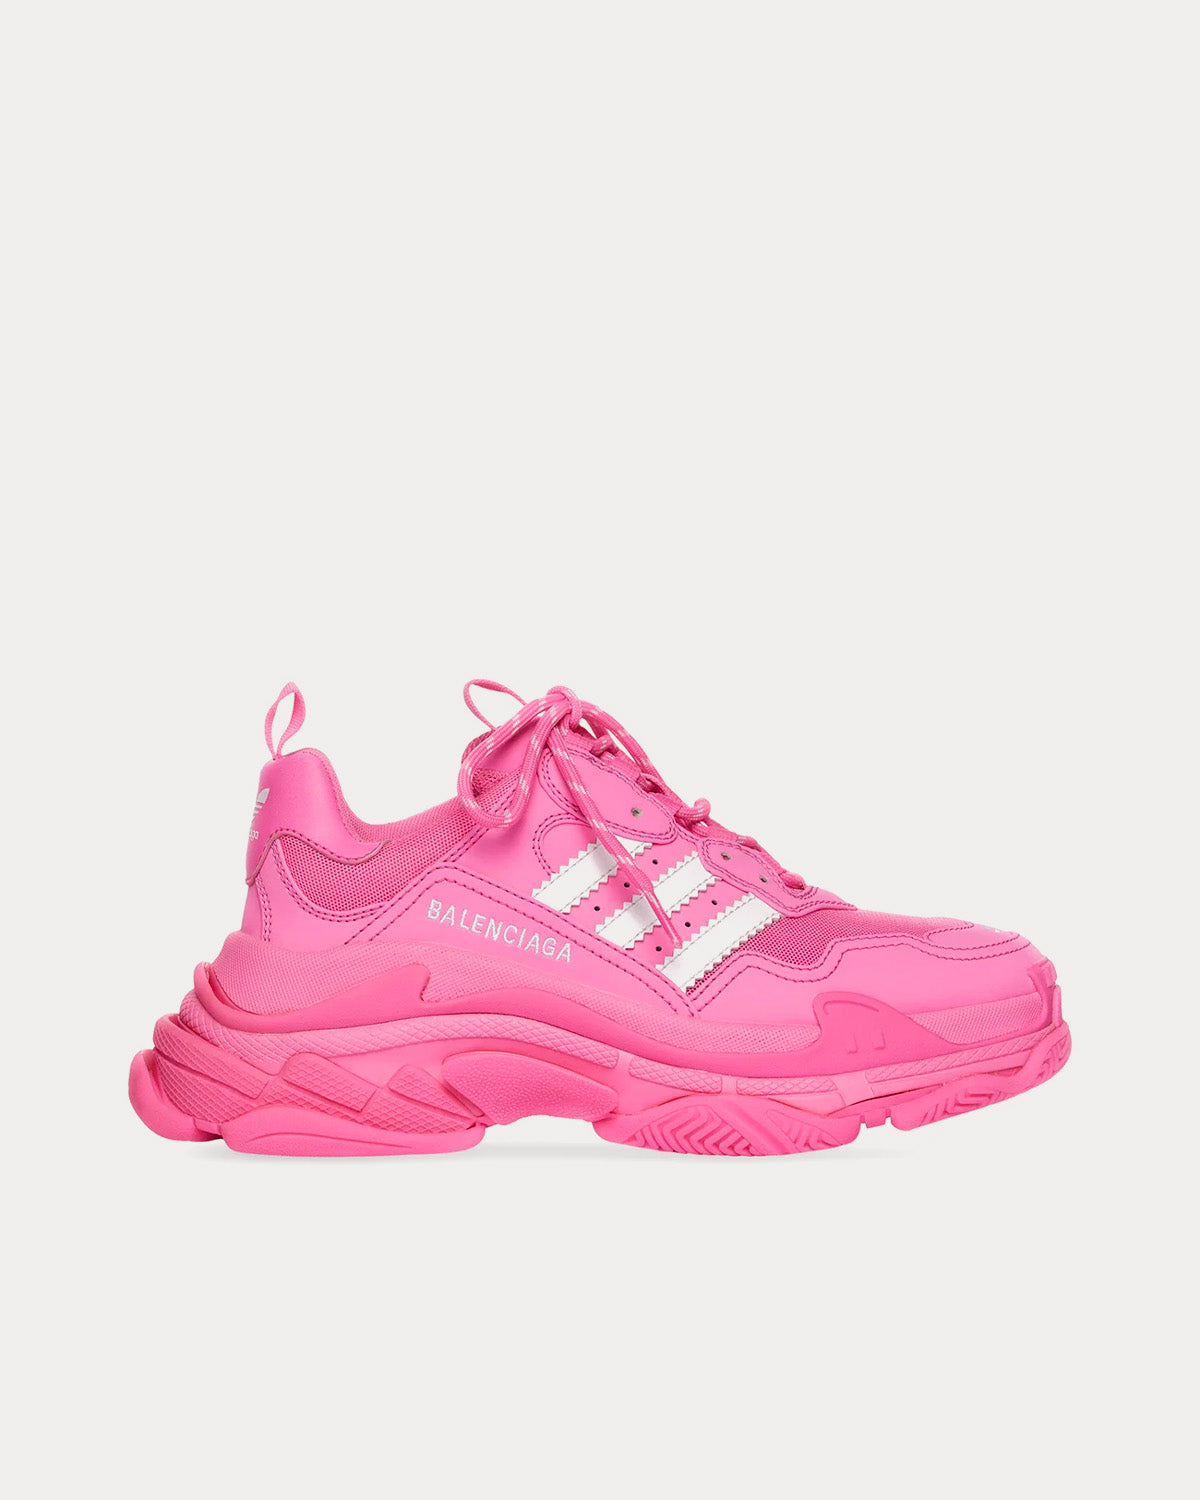 Balenciaga x Adidas - Triple S Pink / White Low Top Sneakers